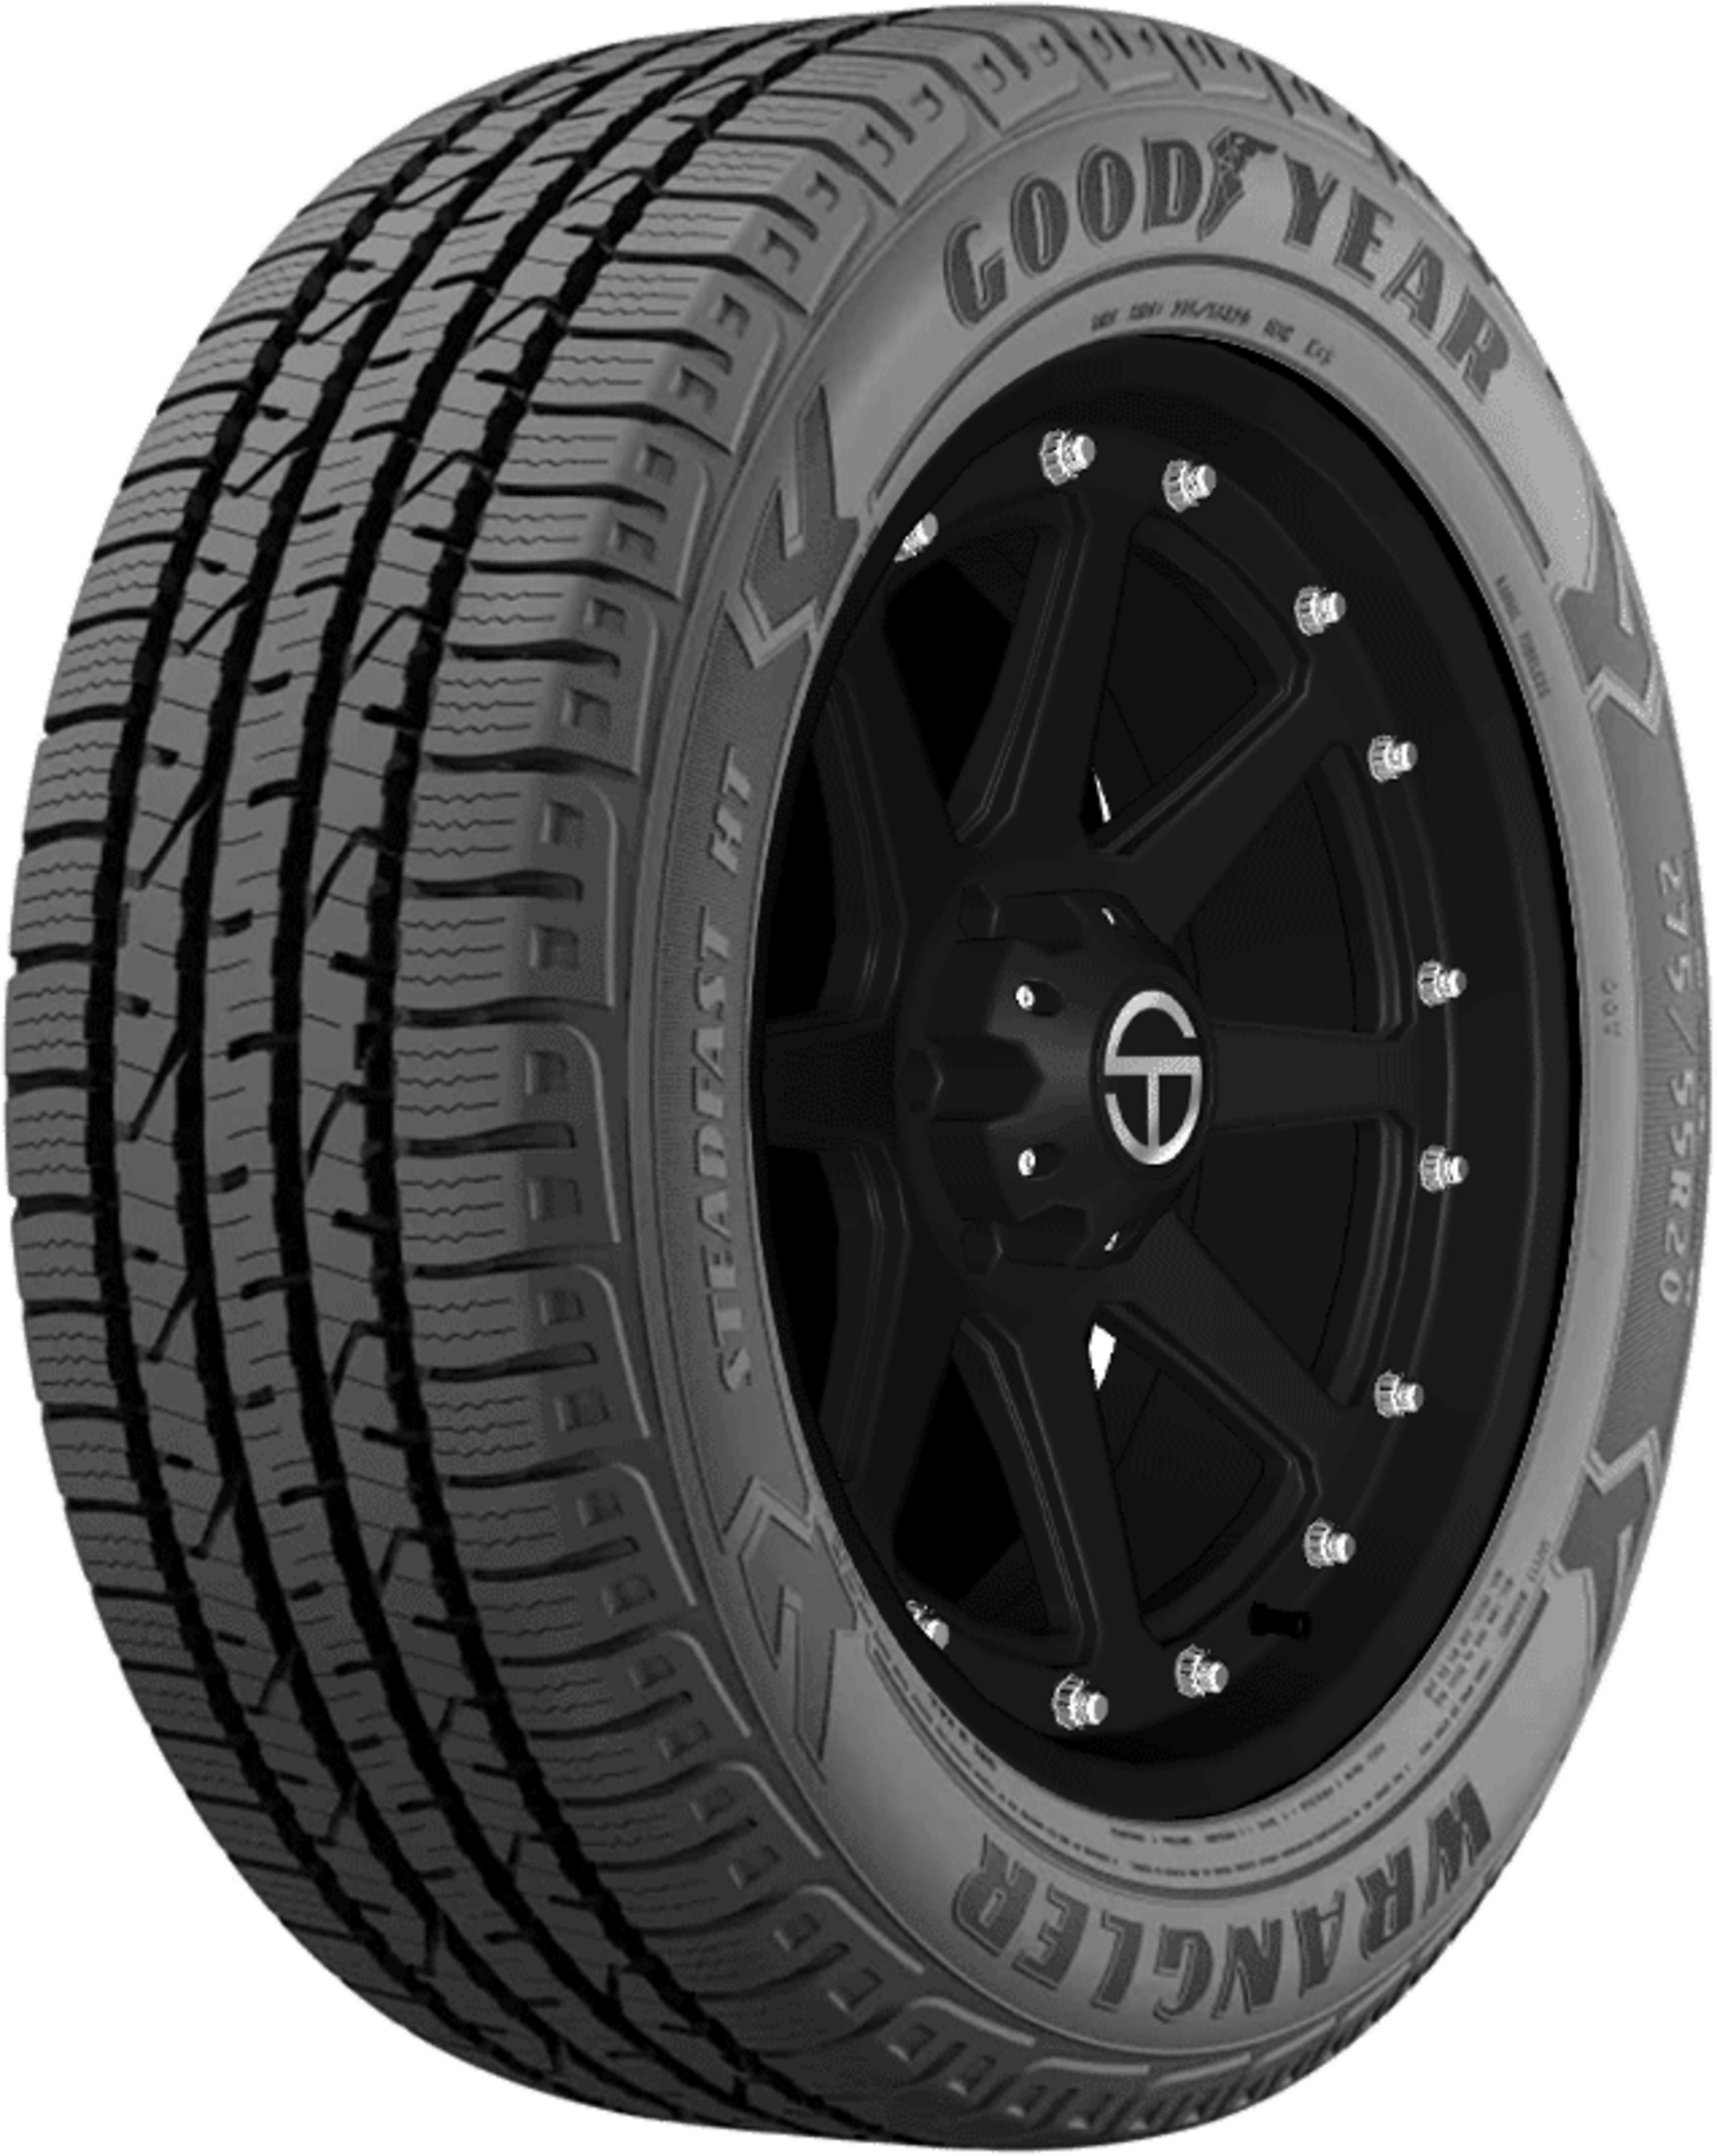 Buy Goodyear Wrangler Steadfast HT Tires Online | SimpleTire